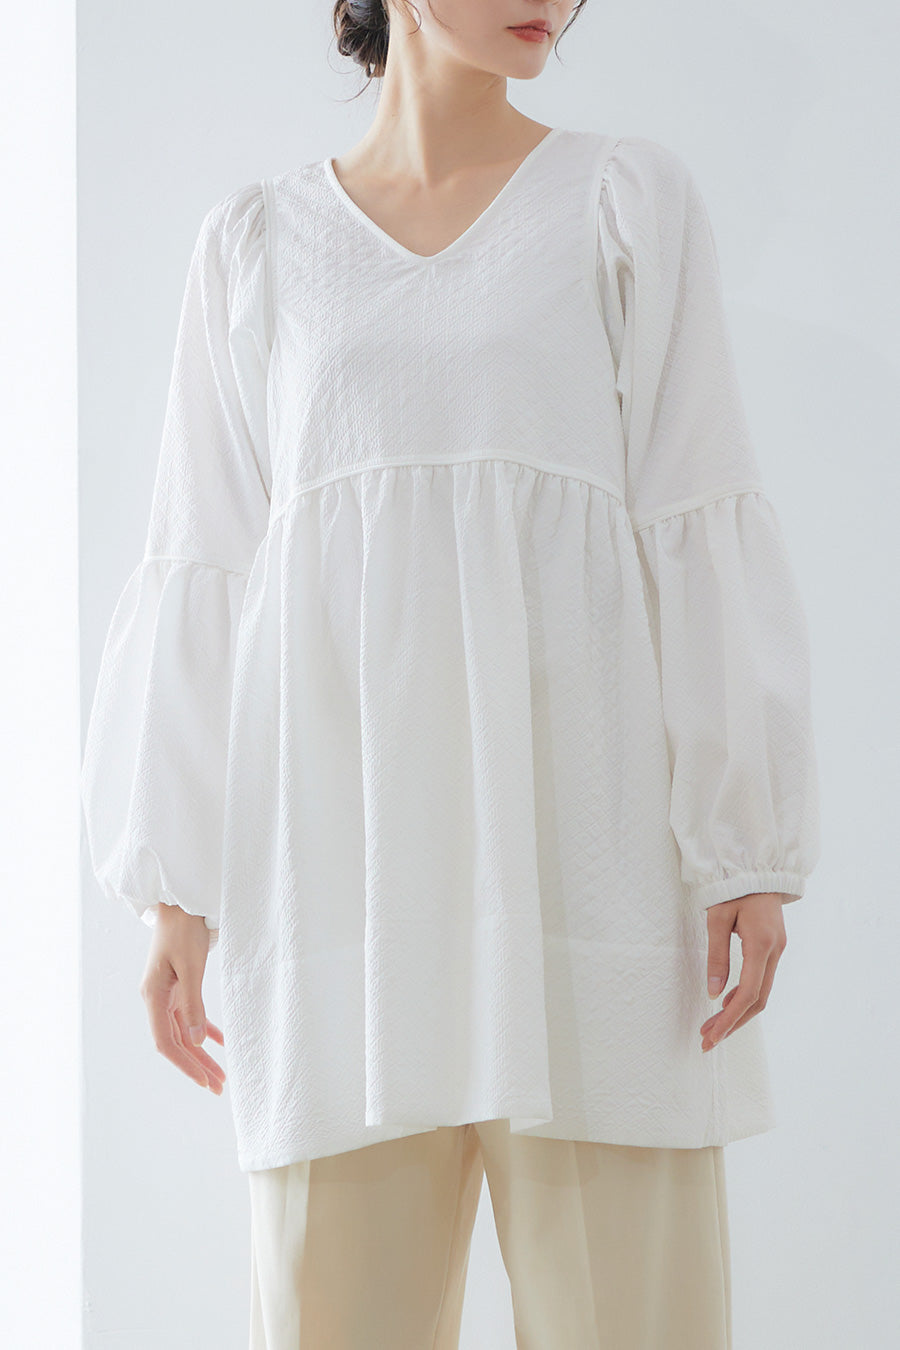 Marshmallow tunic blouse / white – ensuite_official